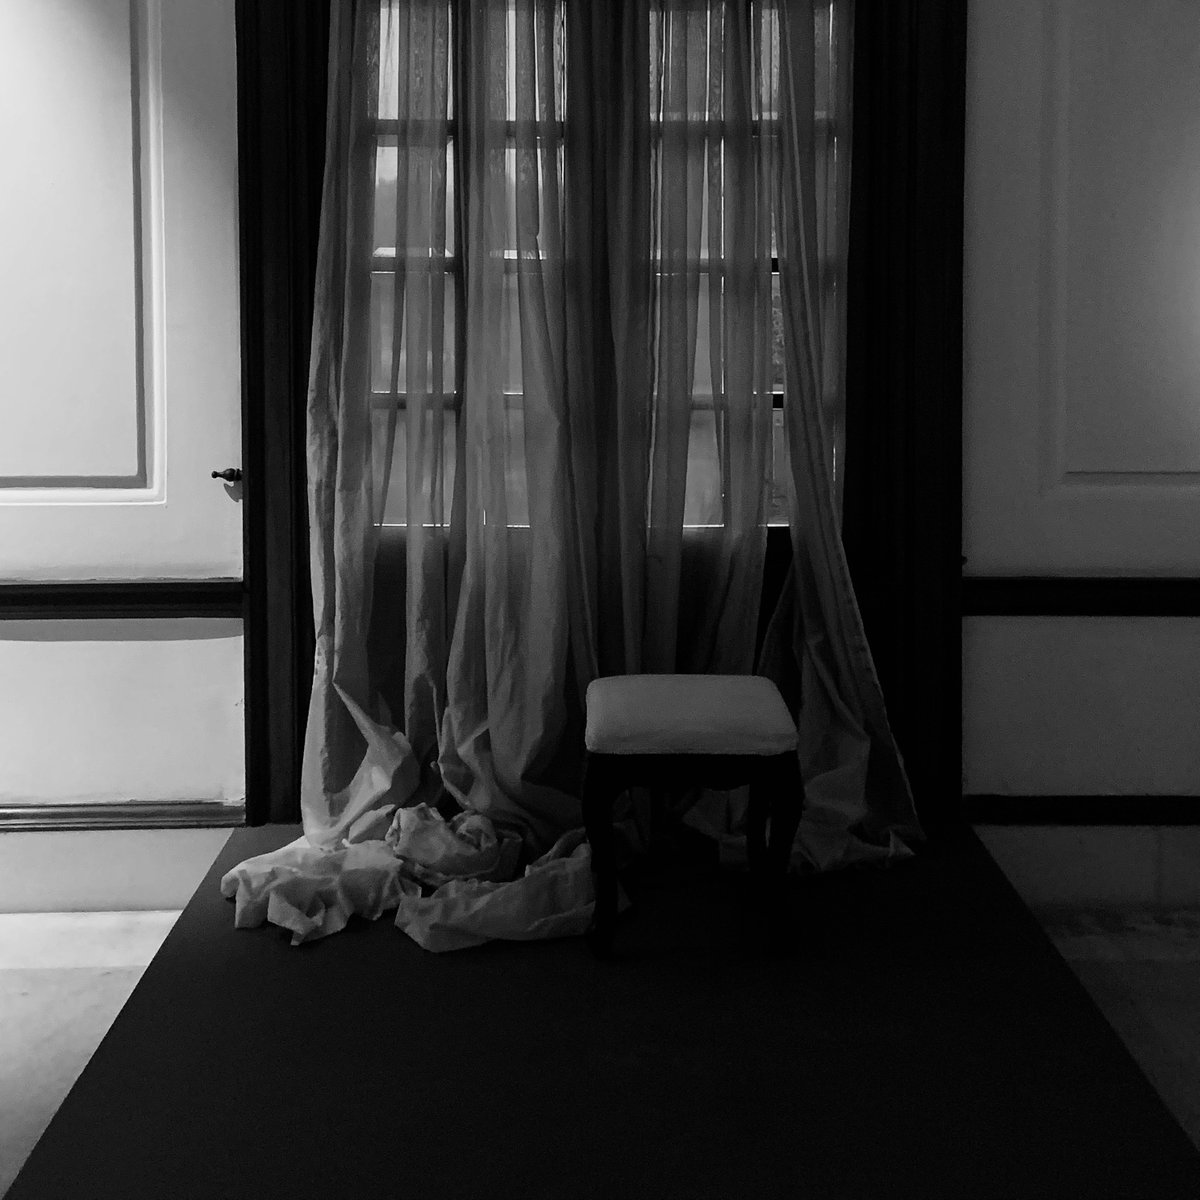 flowing in stillness.

#blackandwhitephotography #door #stillphotography #art #mananchrome